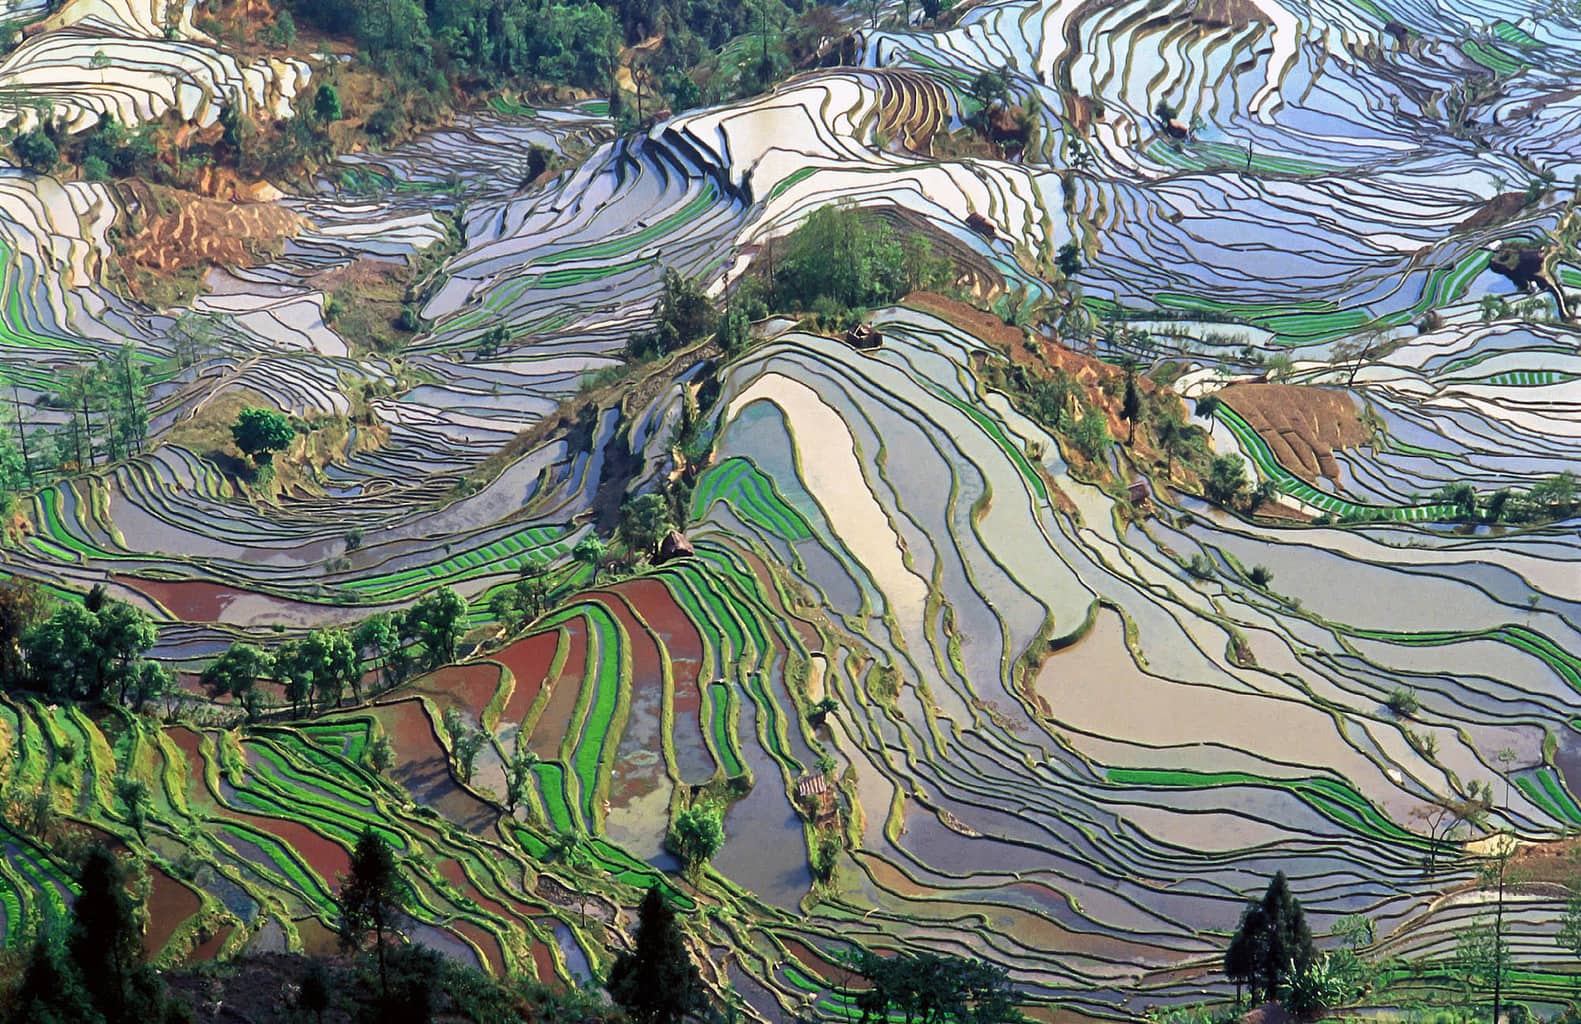 "Honghe Hani Rice Terraces, Jialiang Gao, www.peace-on-earth.org GFDL/CC-by-sa-2.5"